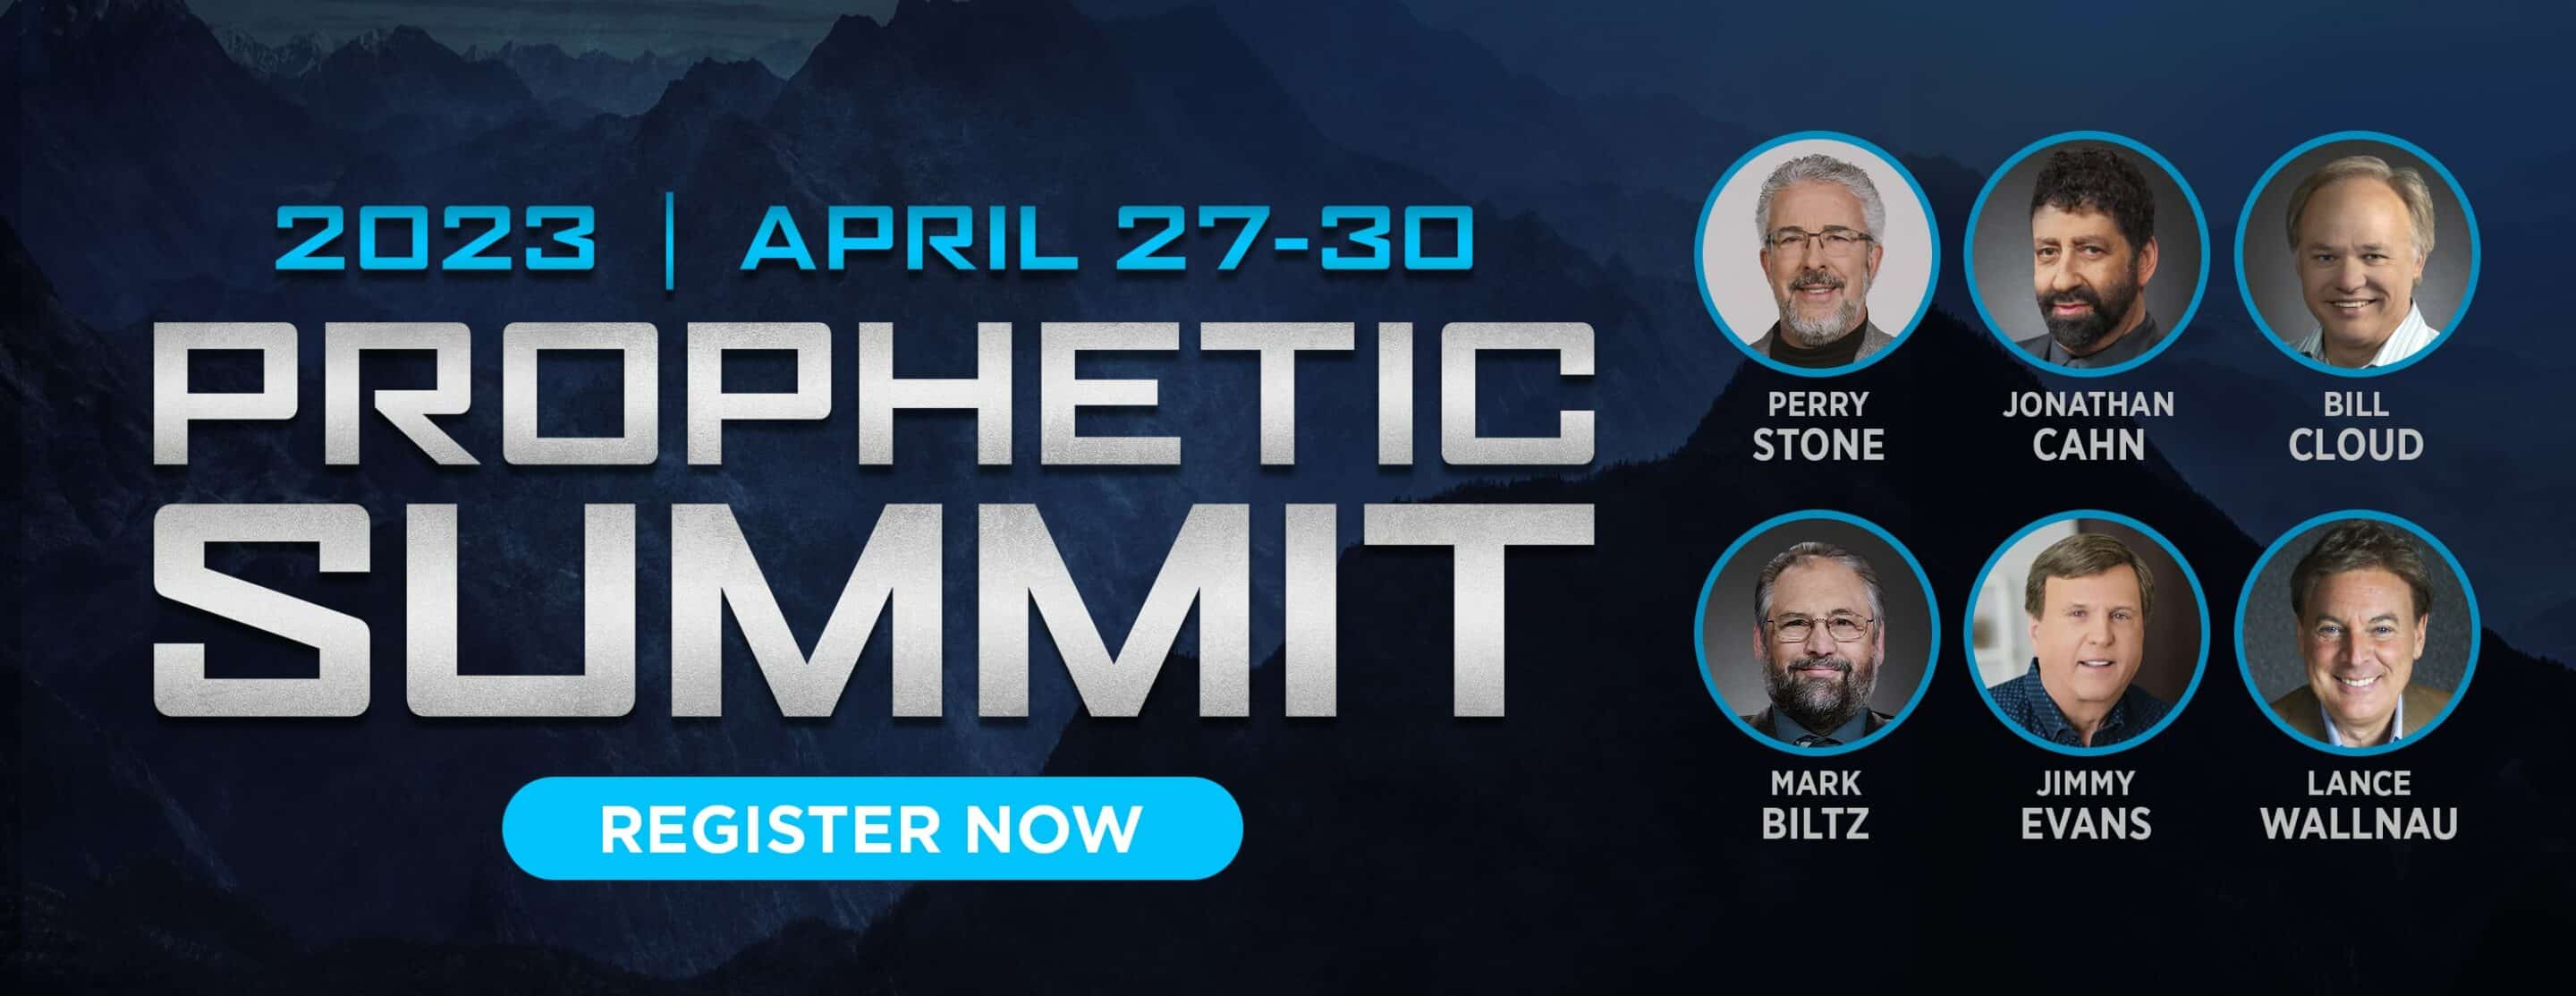 2023 Prophetic Summit Web Banner-min